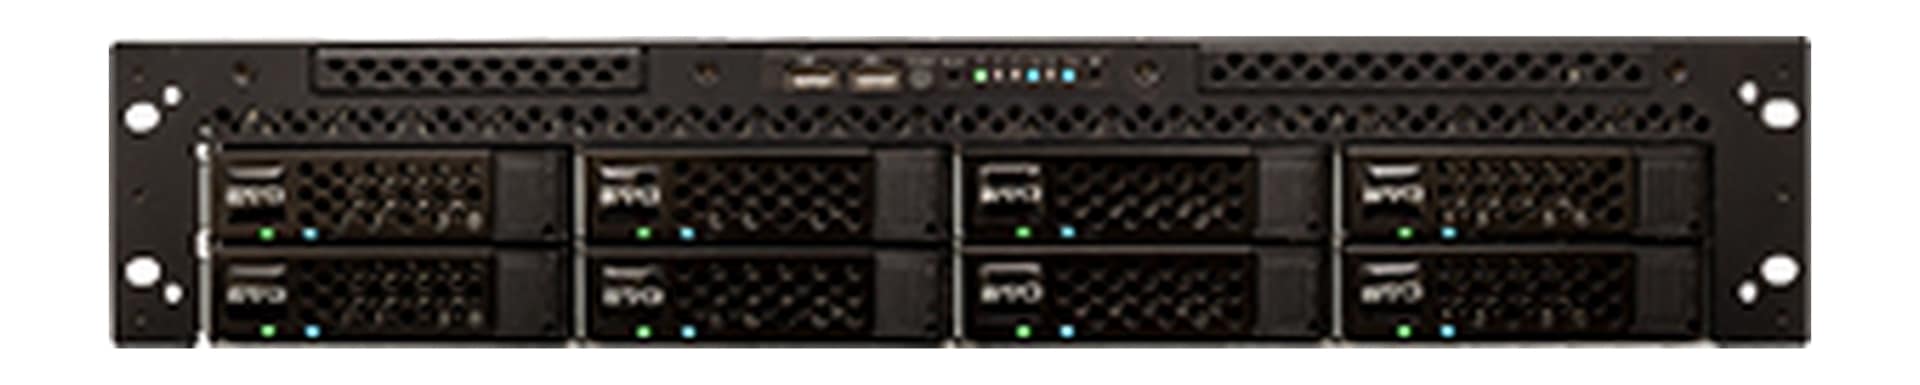 SNS EVO 2U 8 Bay Shared Storage Server with 7.6TB Raw Capacity Solid State